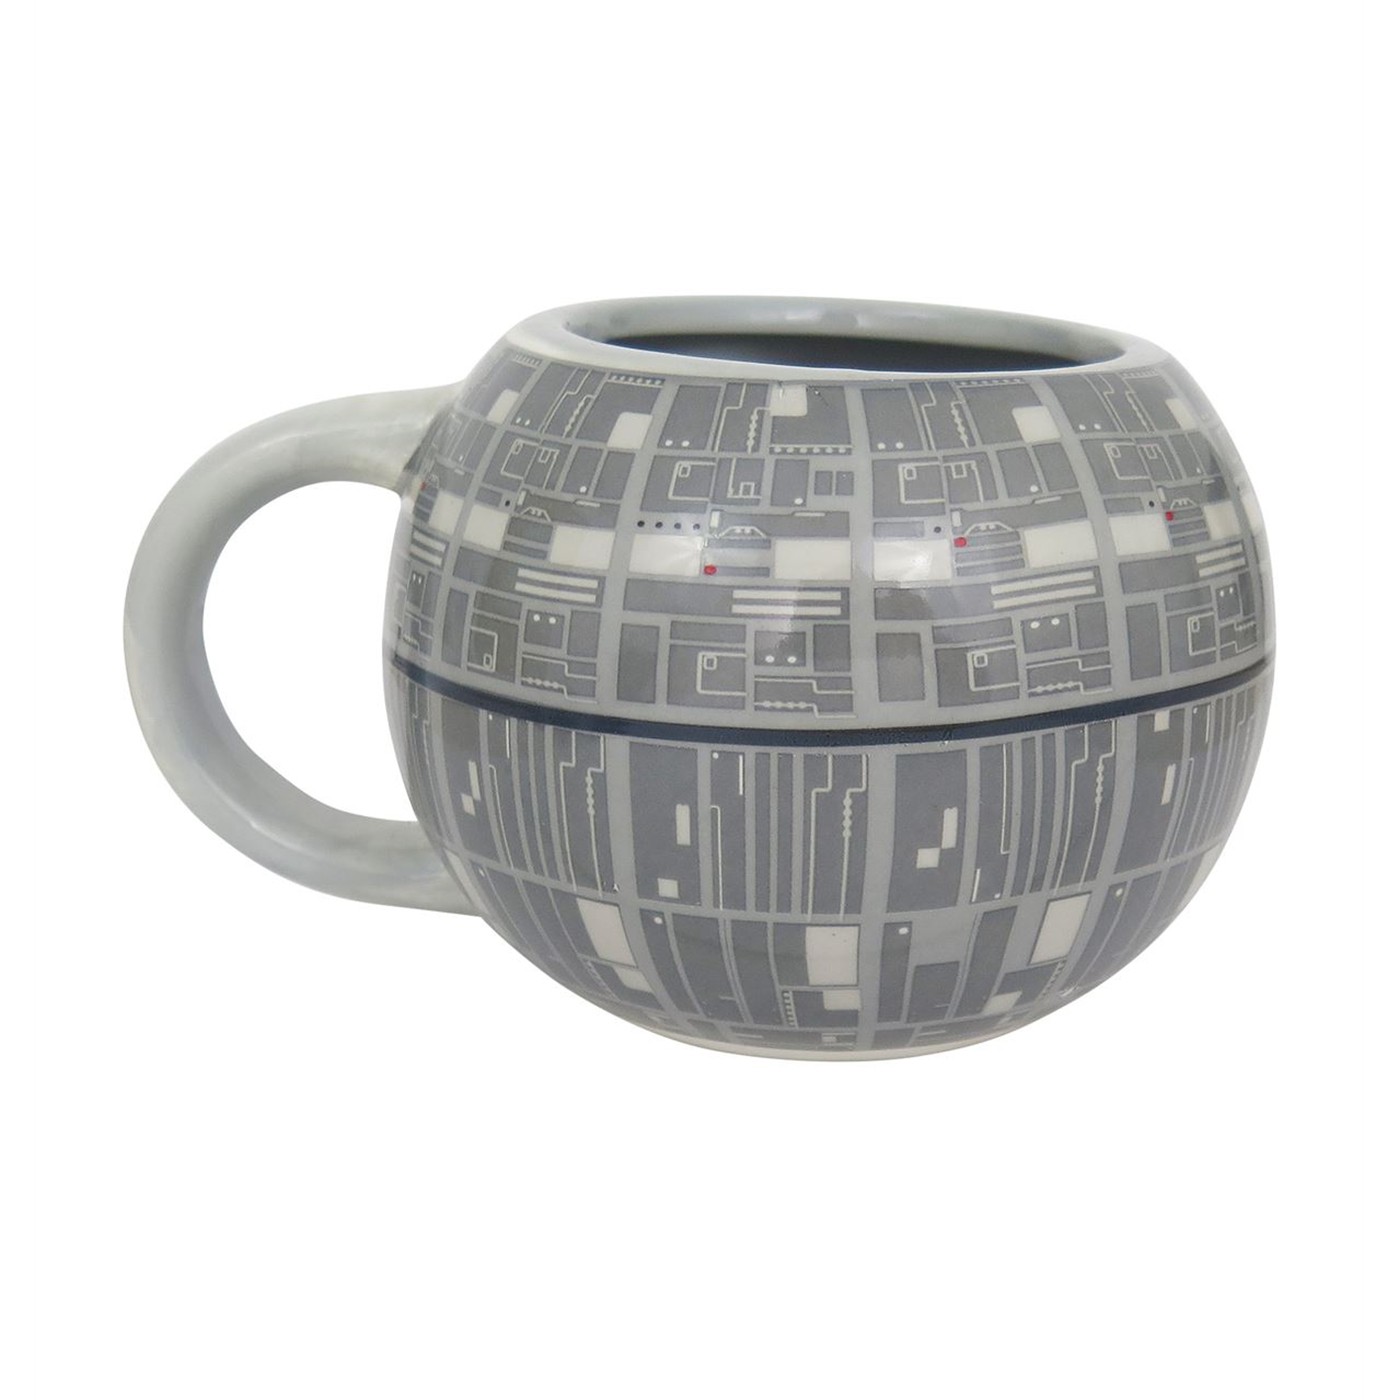 Disney Store Stormtrooper Mug, Star Wars